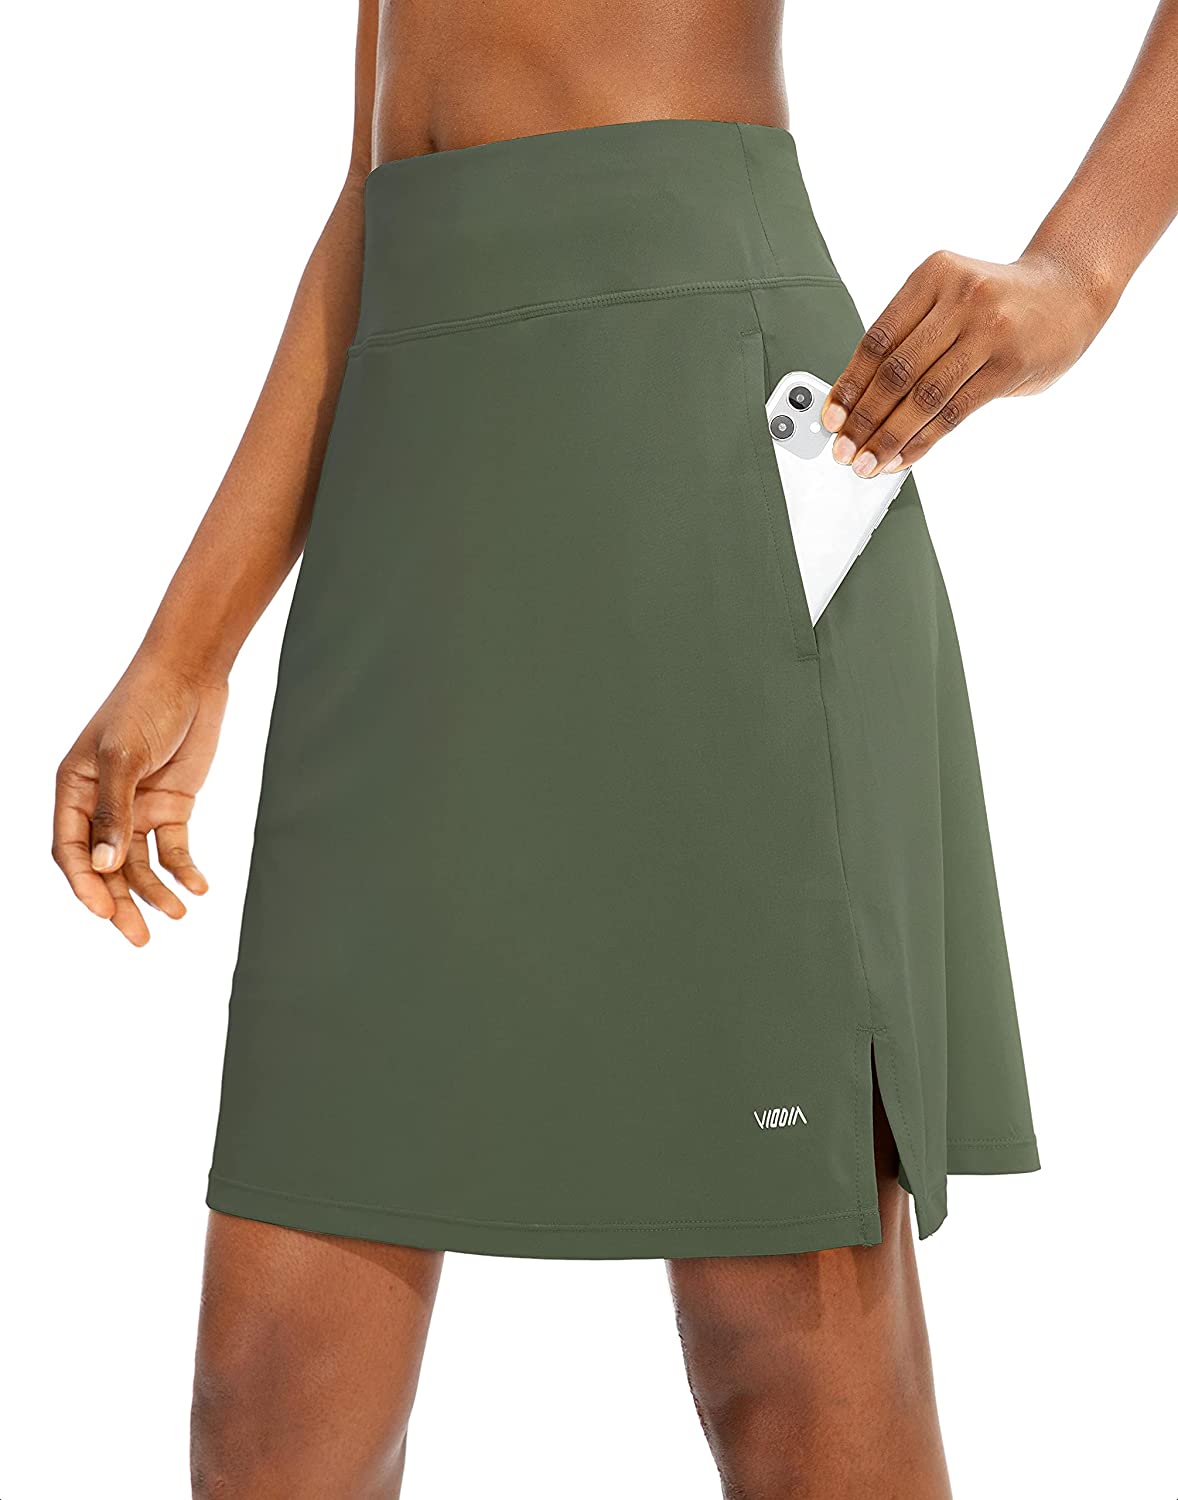 Viodia Women's 20 Knee Length Skorts Skirts UPF50+ Athletic Tennis Golf  Skirt f - Helia Beer Co